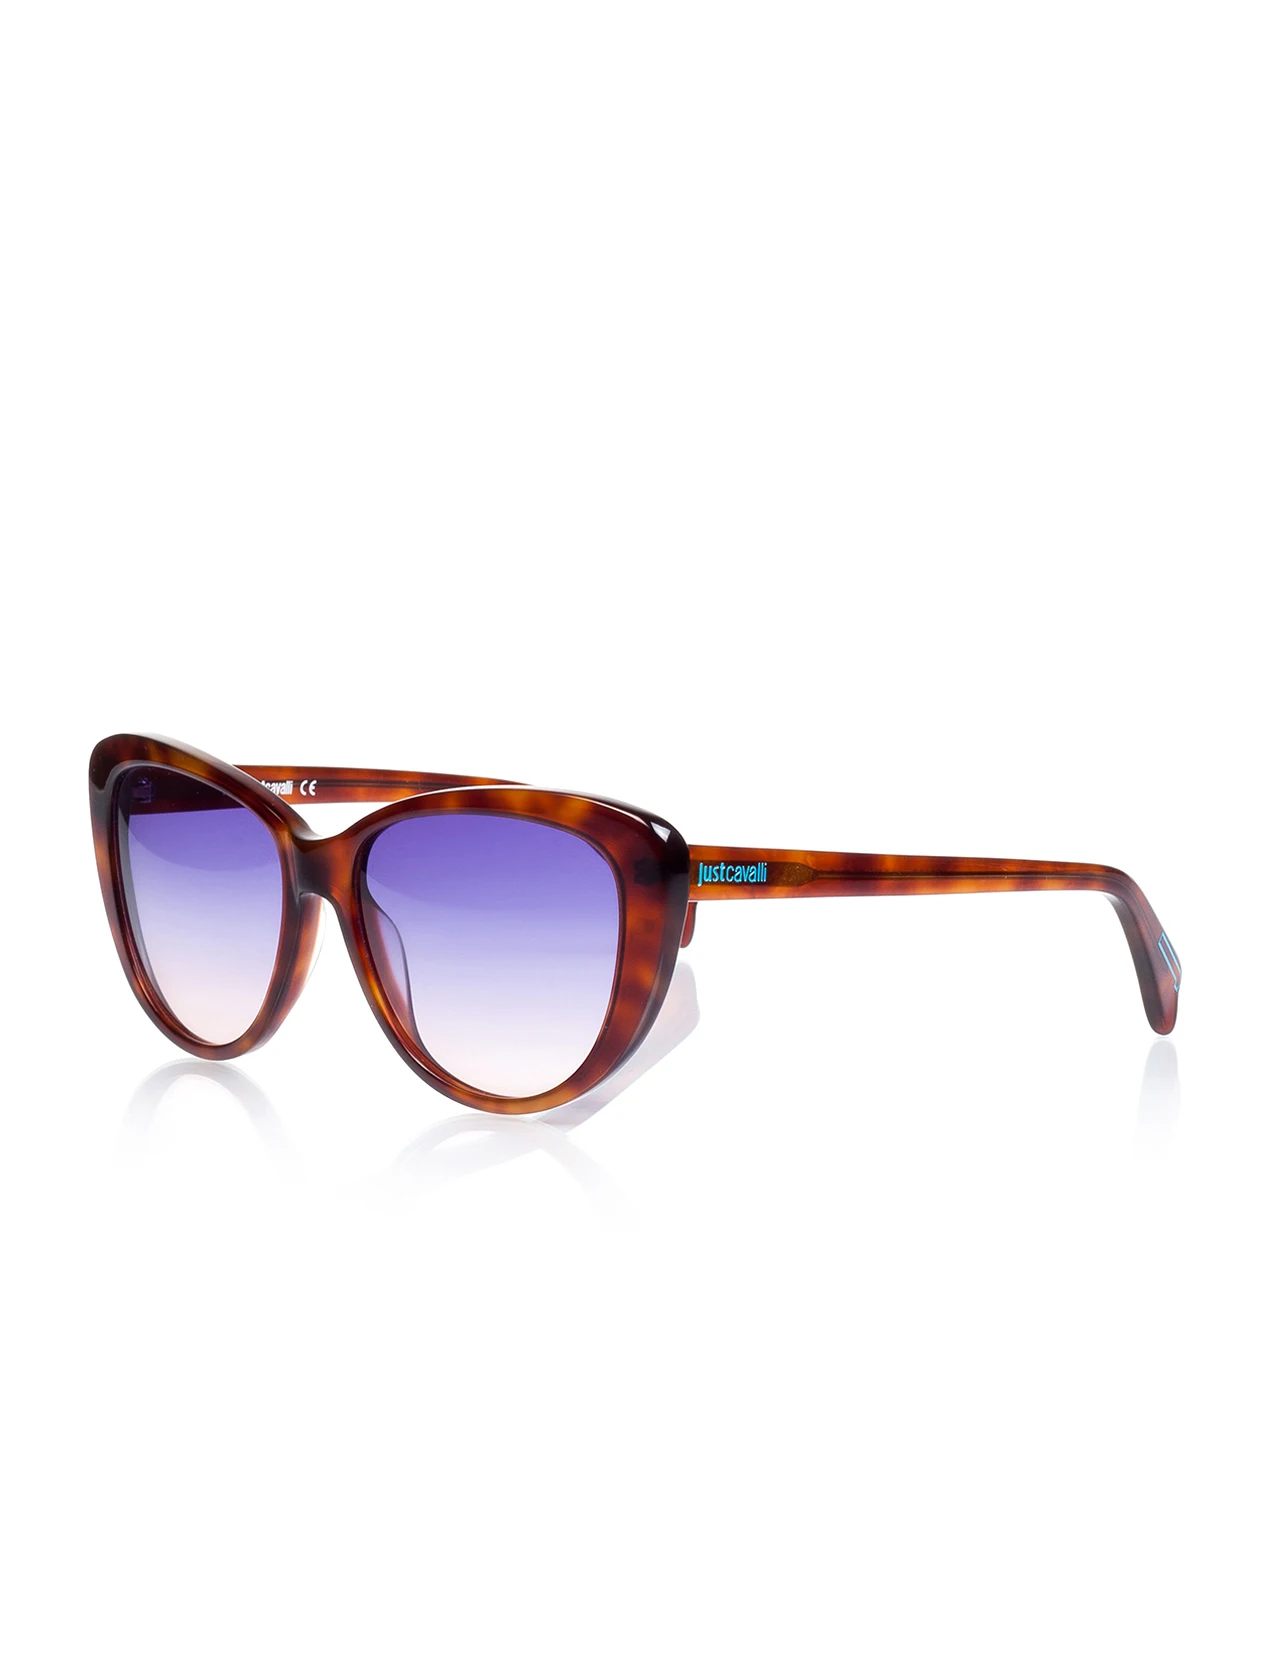 

Women's sunglasses jc 646 53v bone Brown organic oval aval 57-16-135 just cavalli